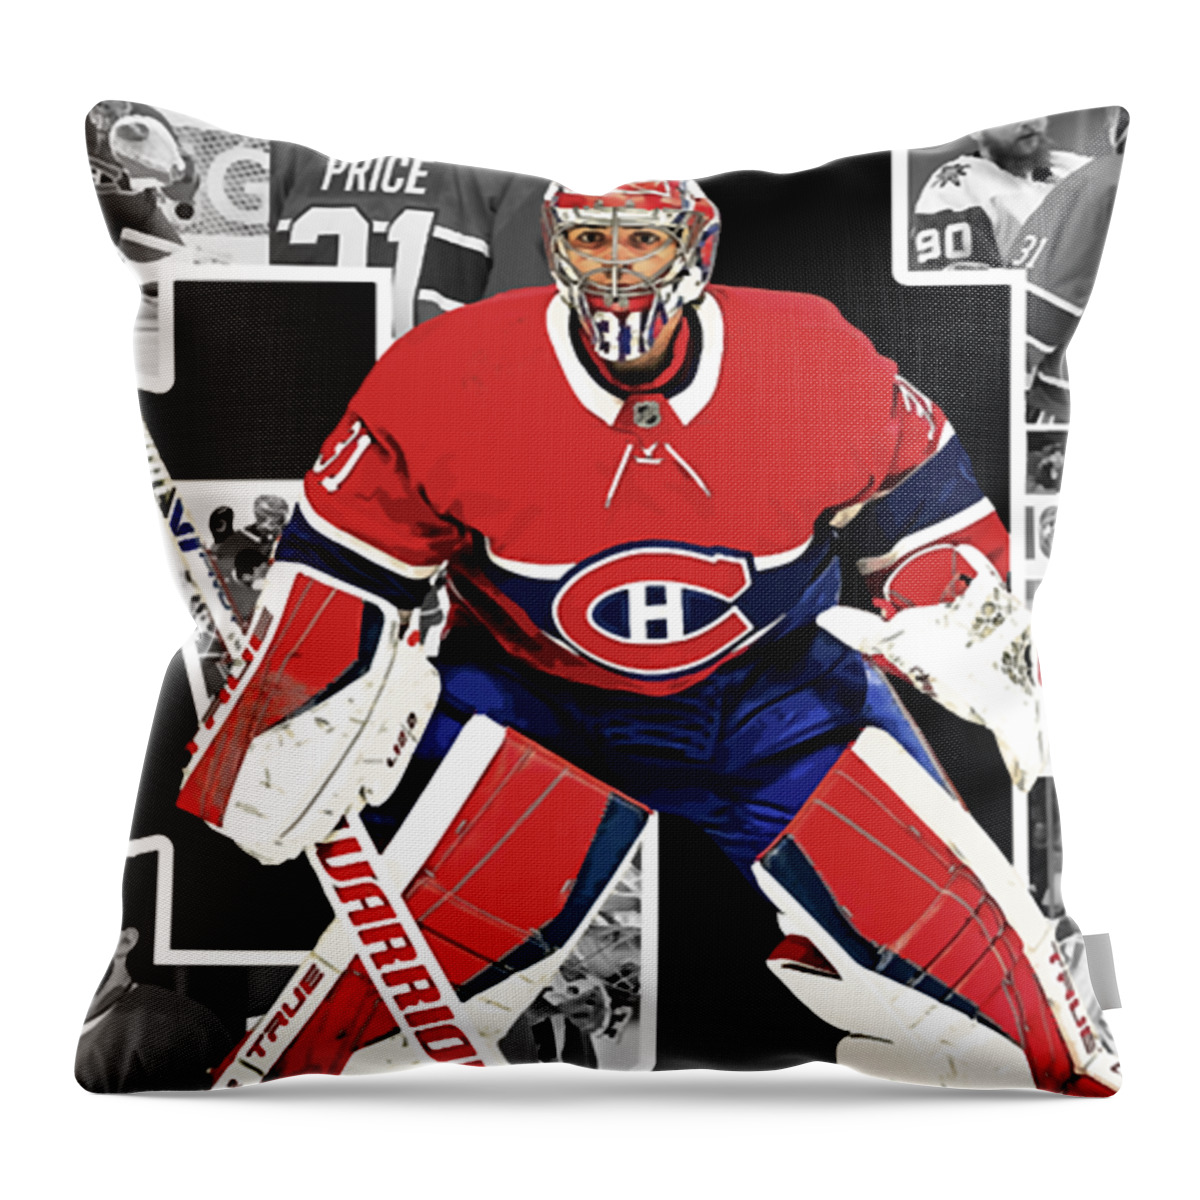 Carey Price Ice Hockey Throw Pillow featuring the digital art Carey Price Ice Hockey by Kelvin Kent